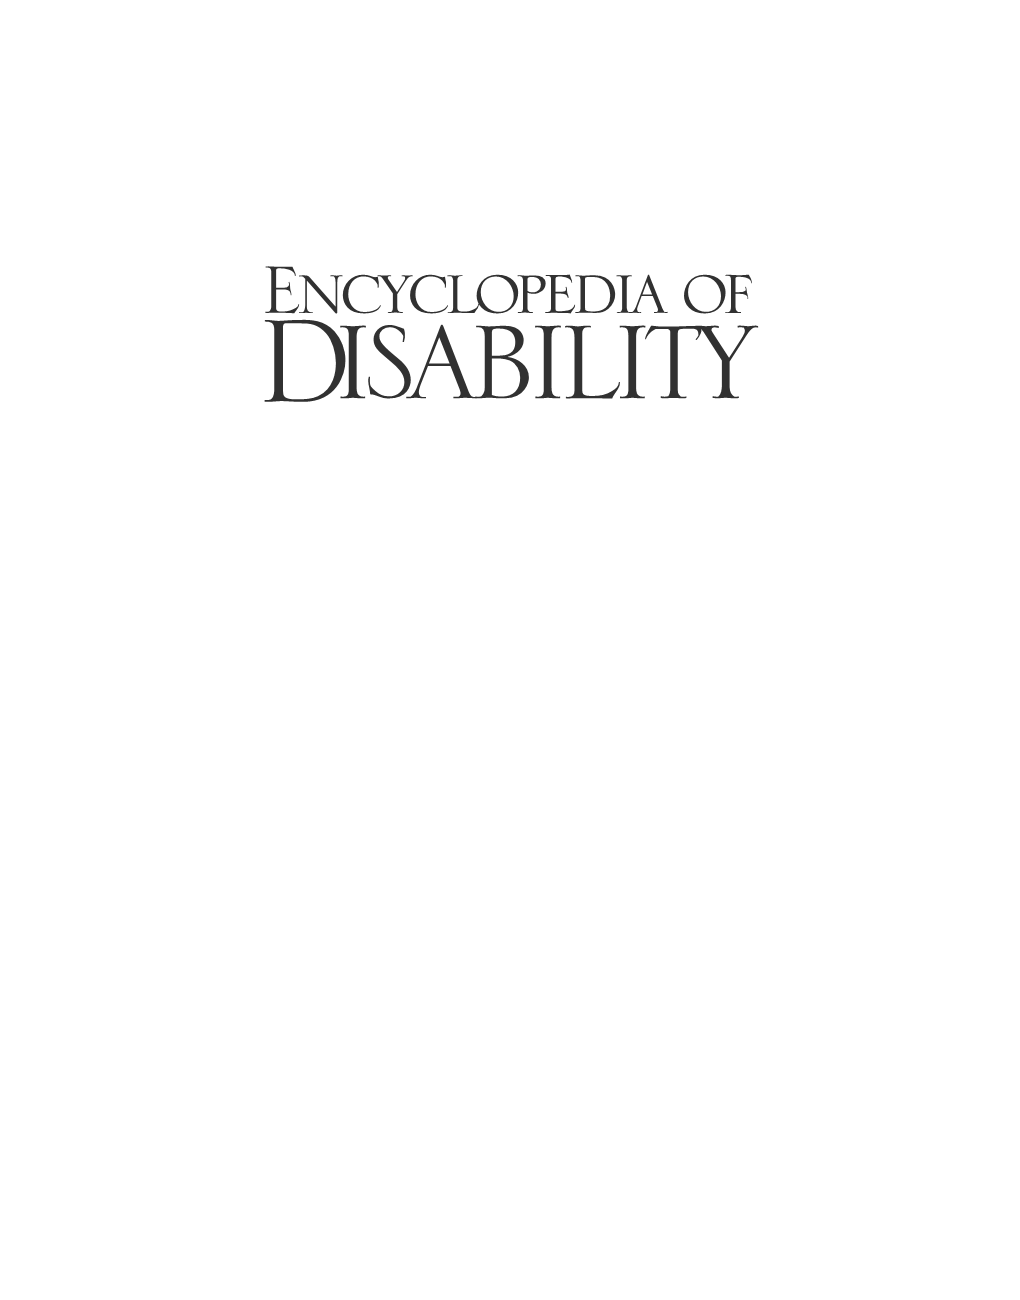 Encyclopedia of Disability / General Editor, Gary L